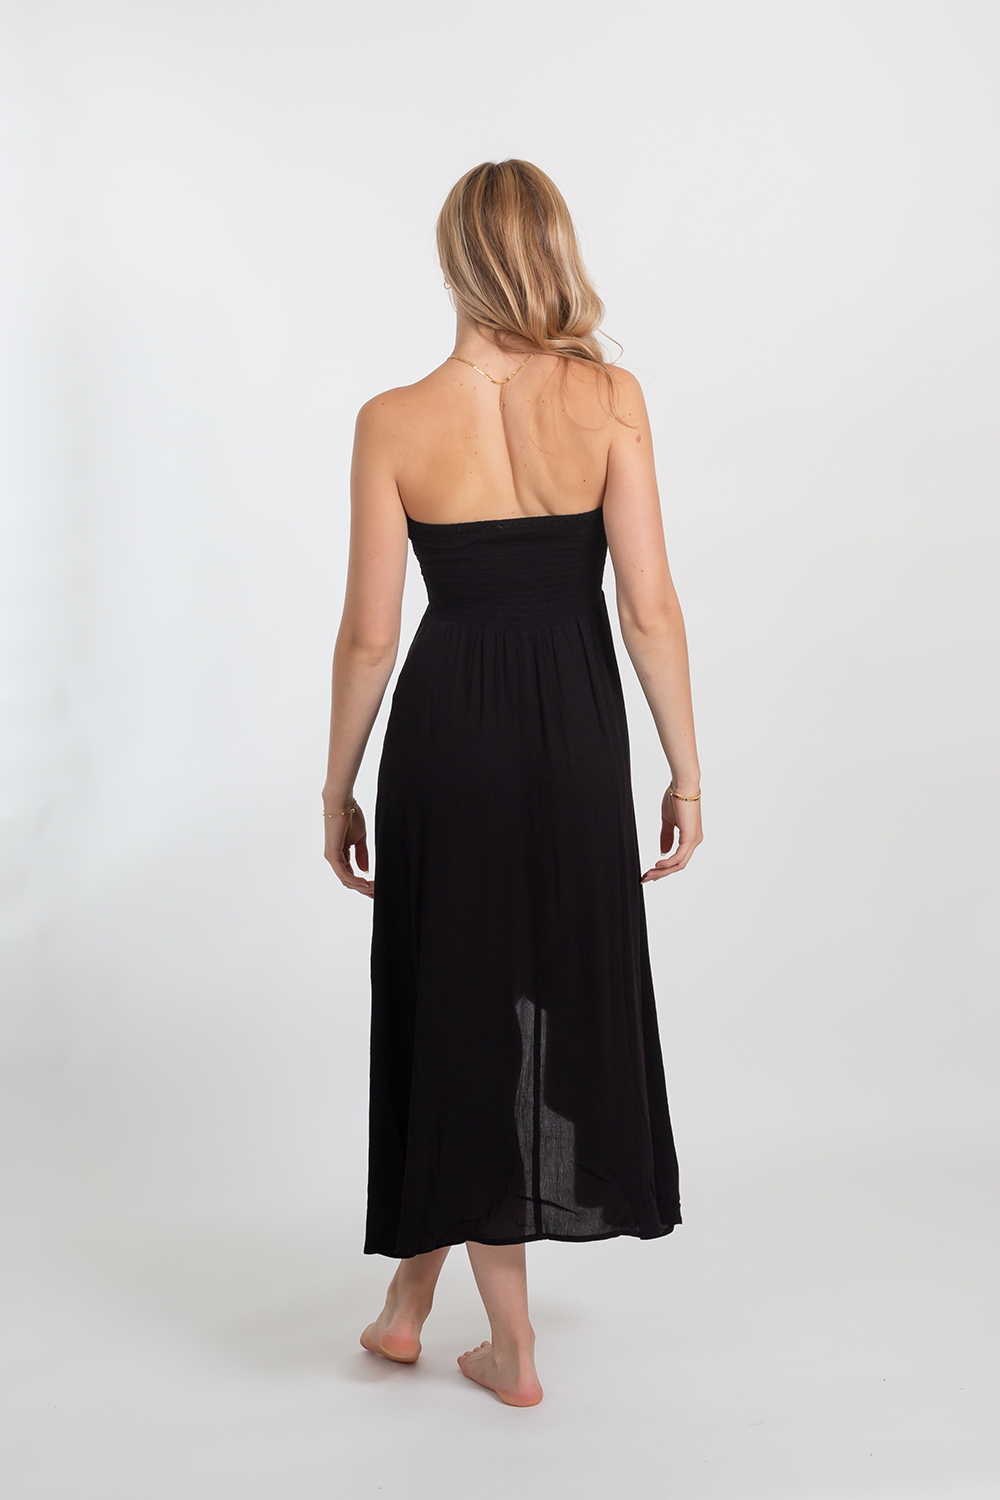 koy resort miami convertible smocked hi-lo hem 2-1 skirt/ dress in black